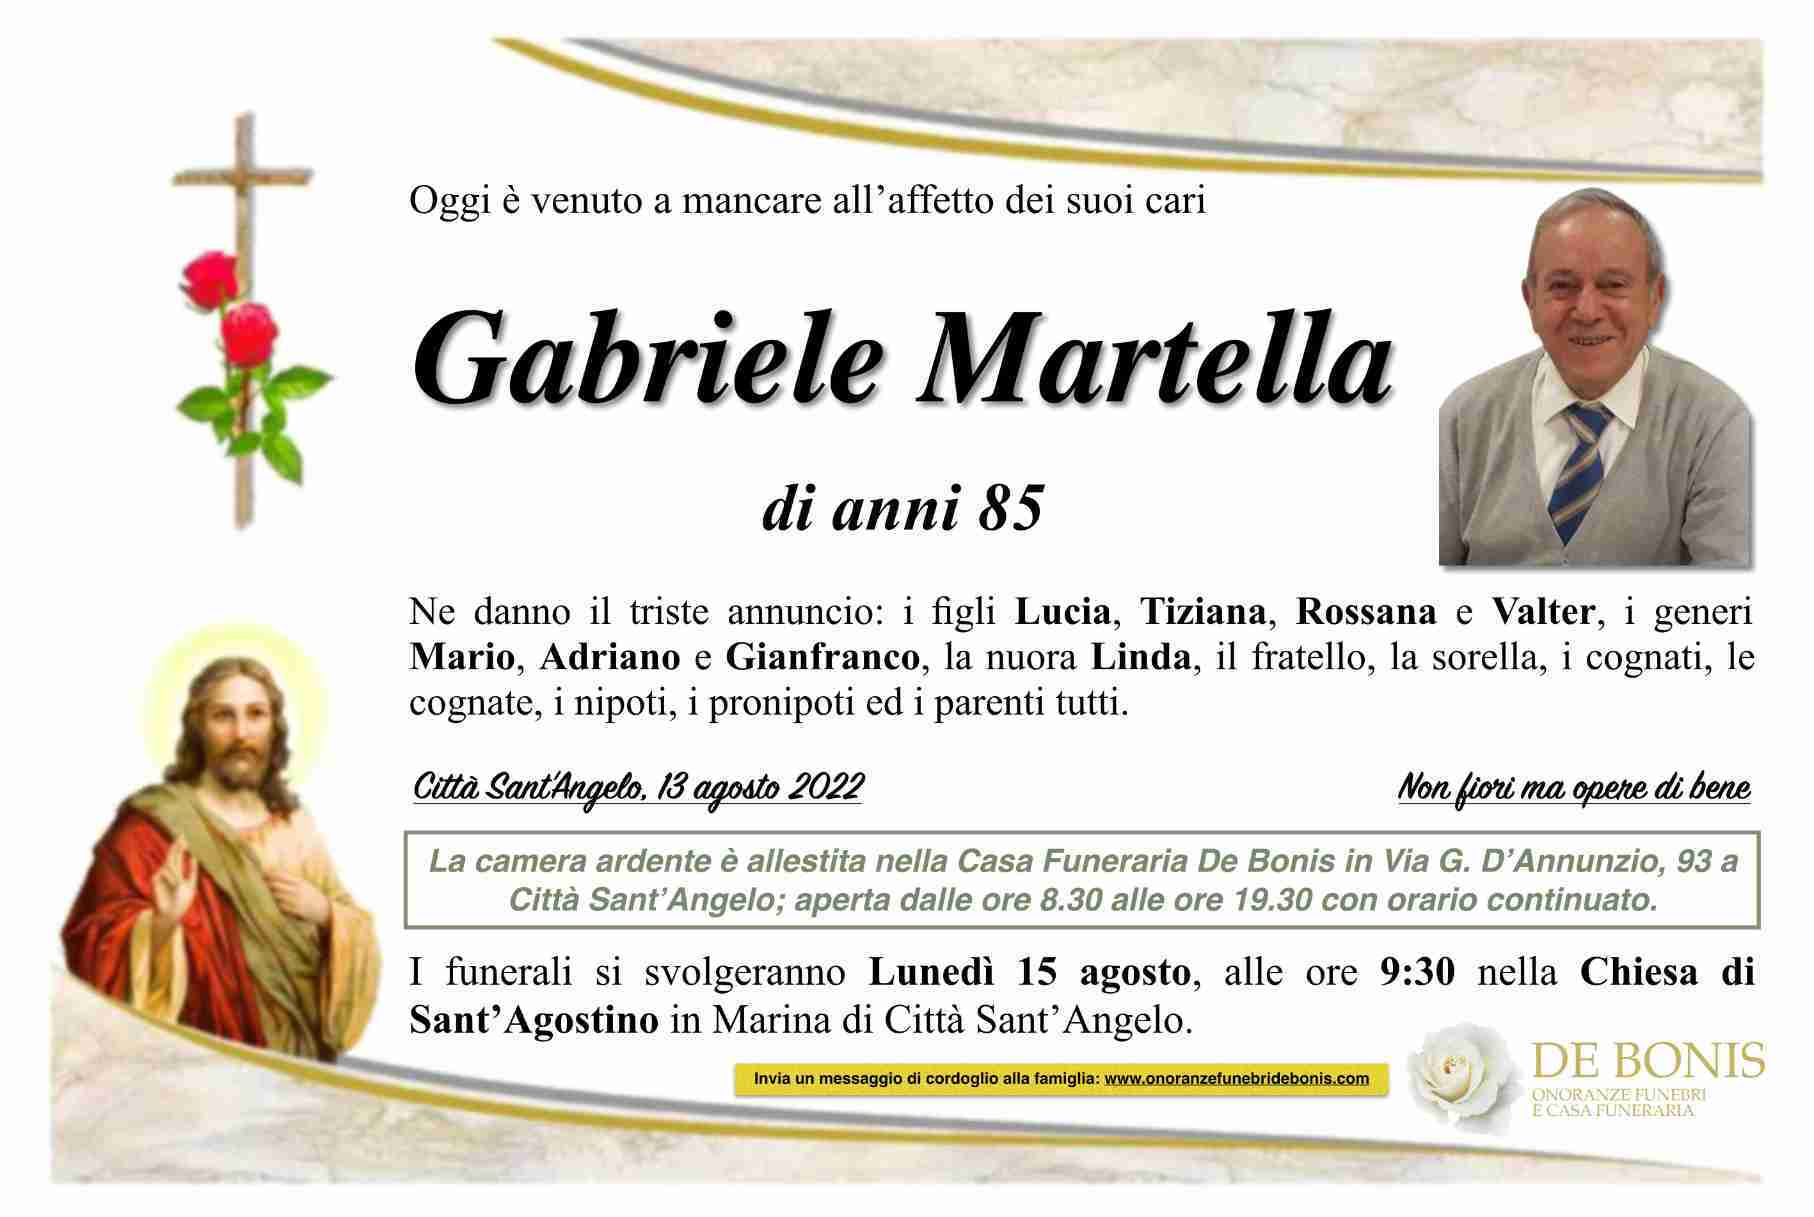 Gabriele Martella